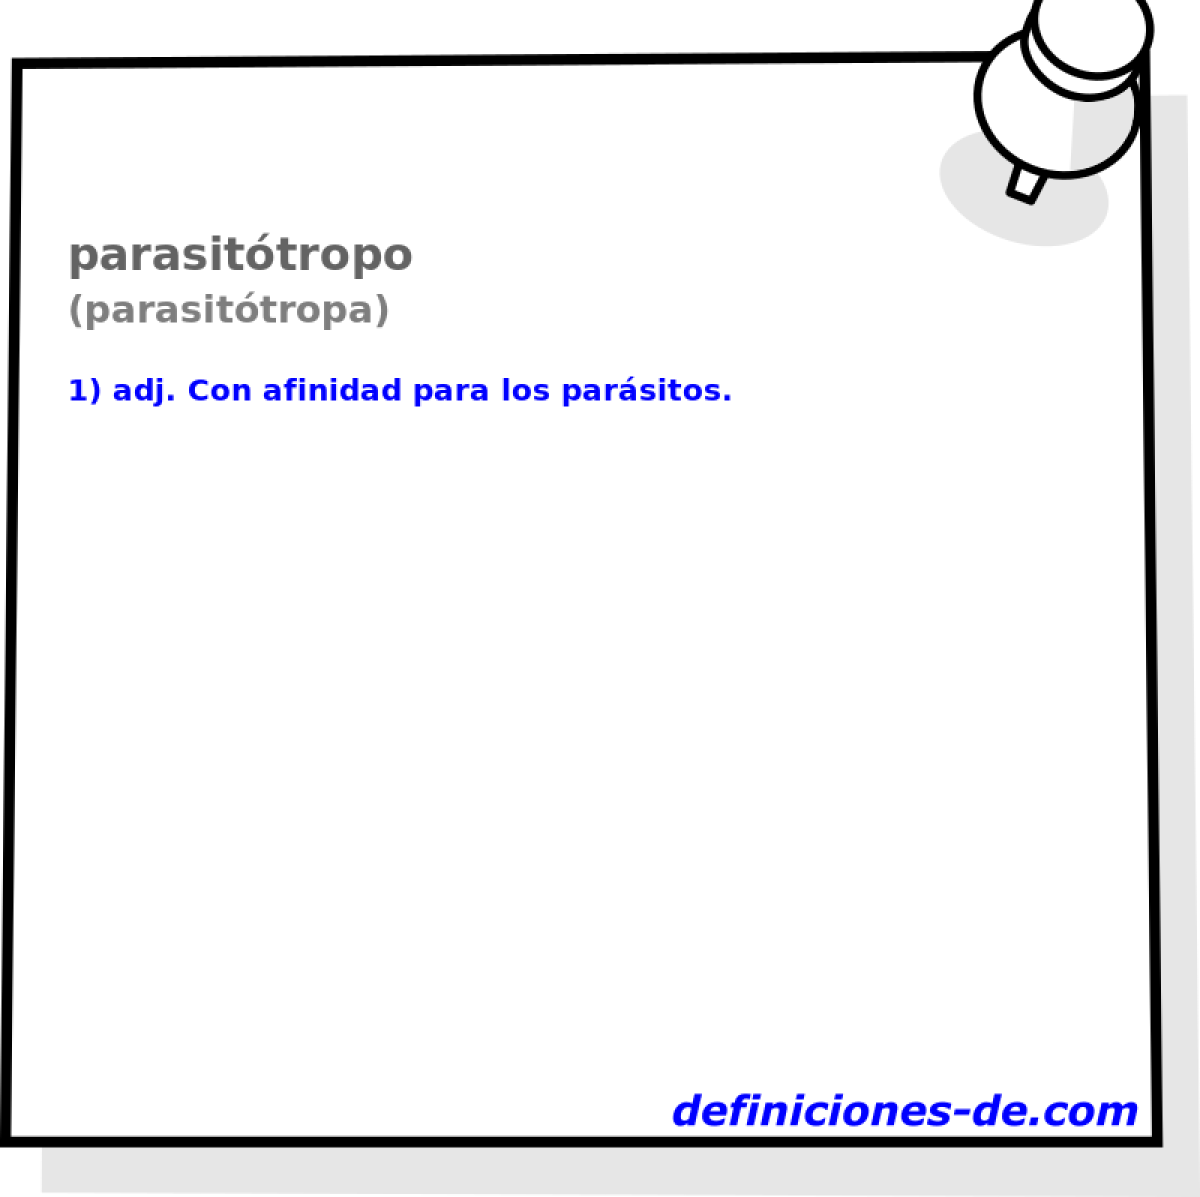 parasittropo (parasittropa)